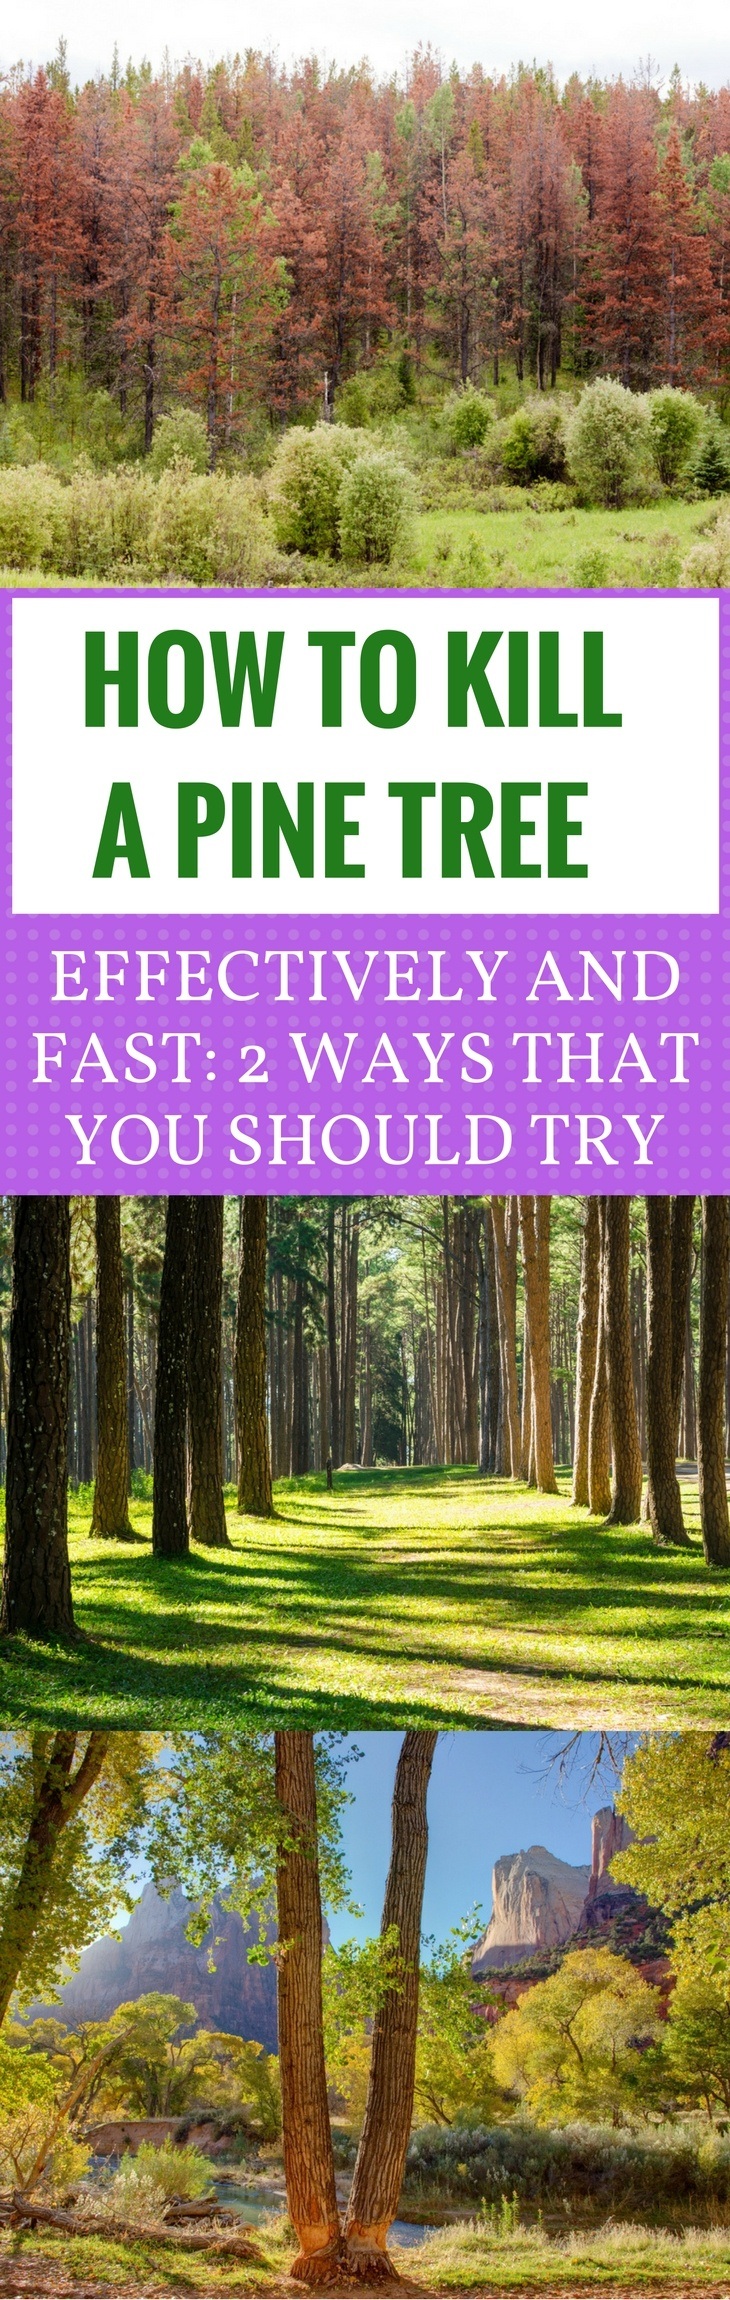 how to kill a pine tree pin it